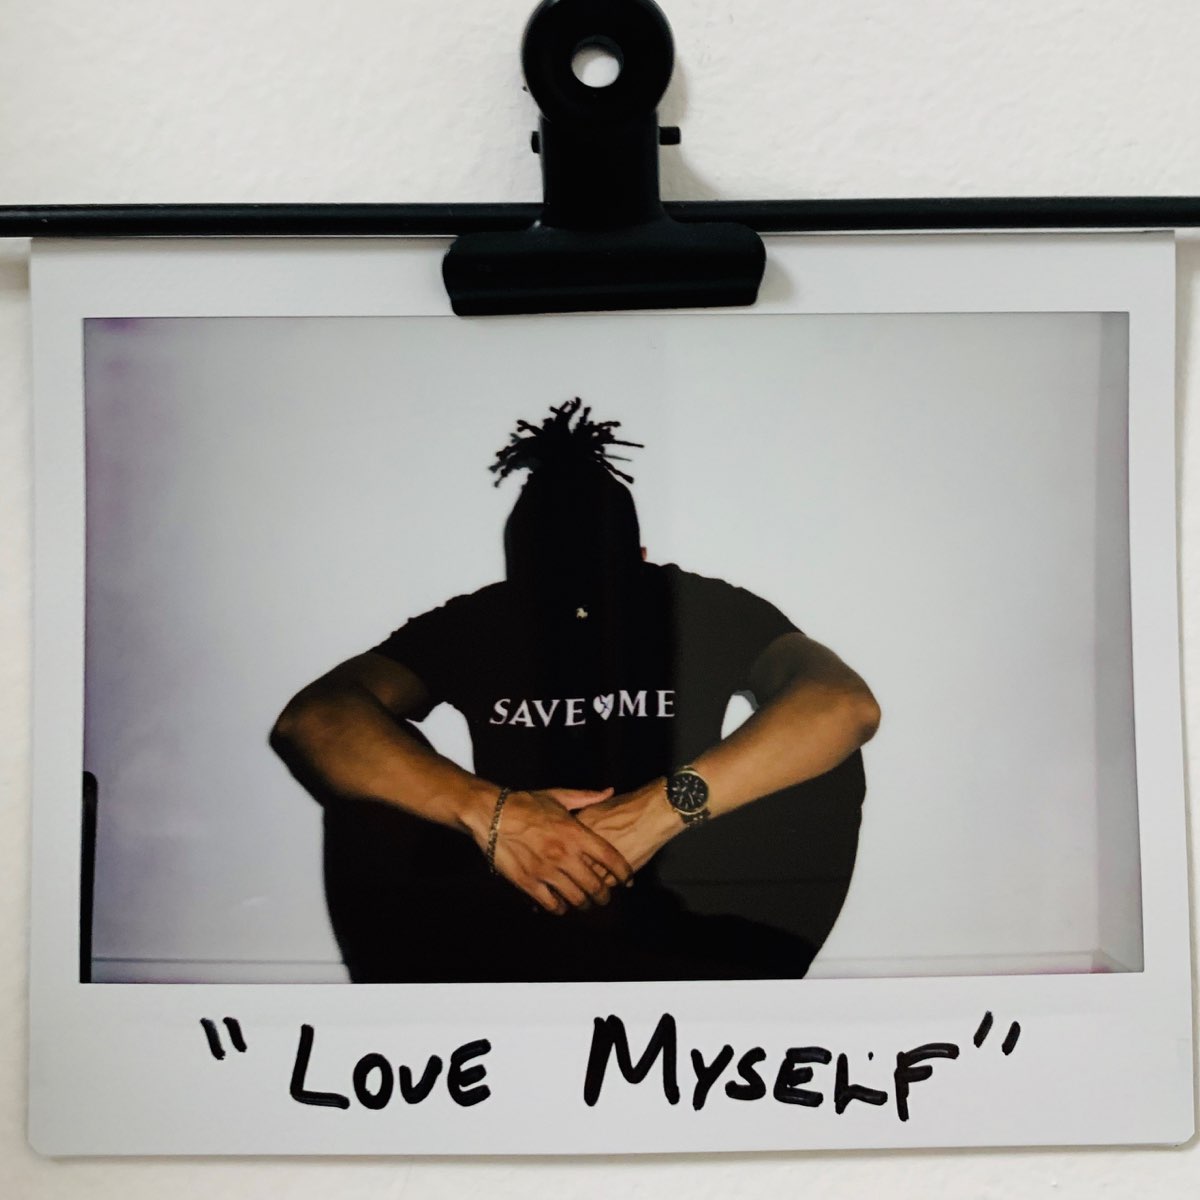 Watch myself. Love myself. Myself певец. Альбом i Love myself.